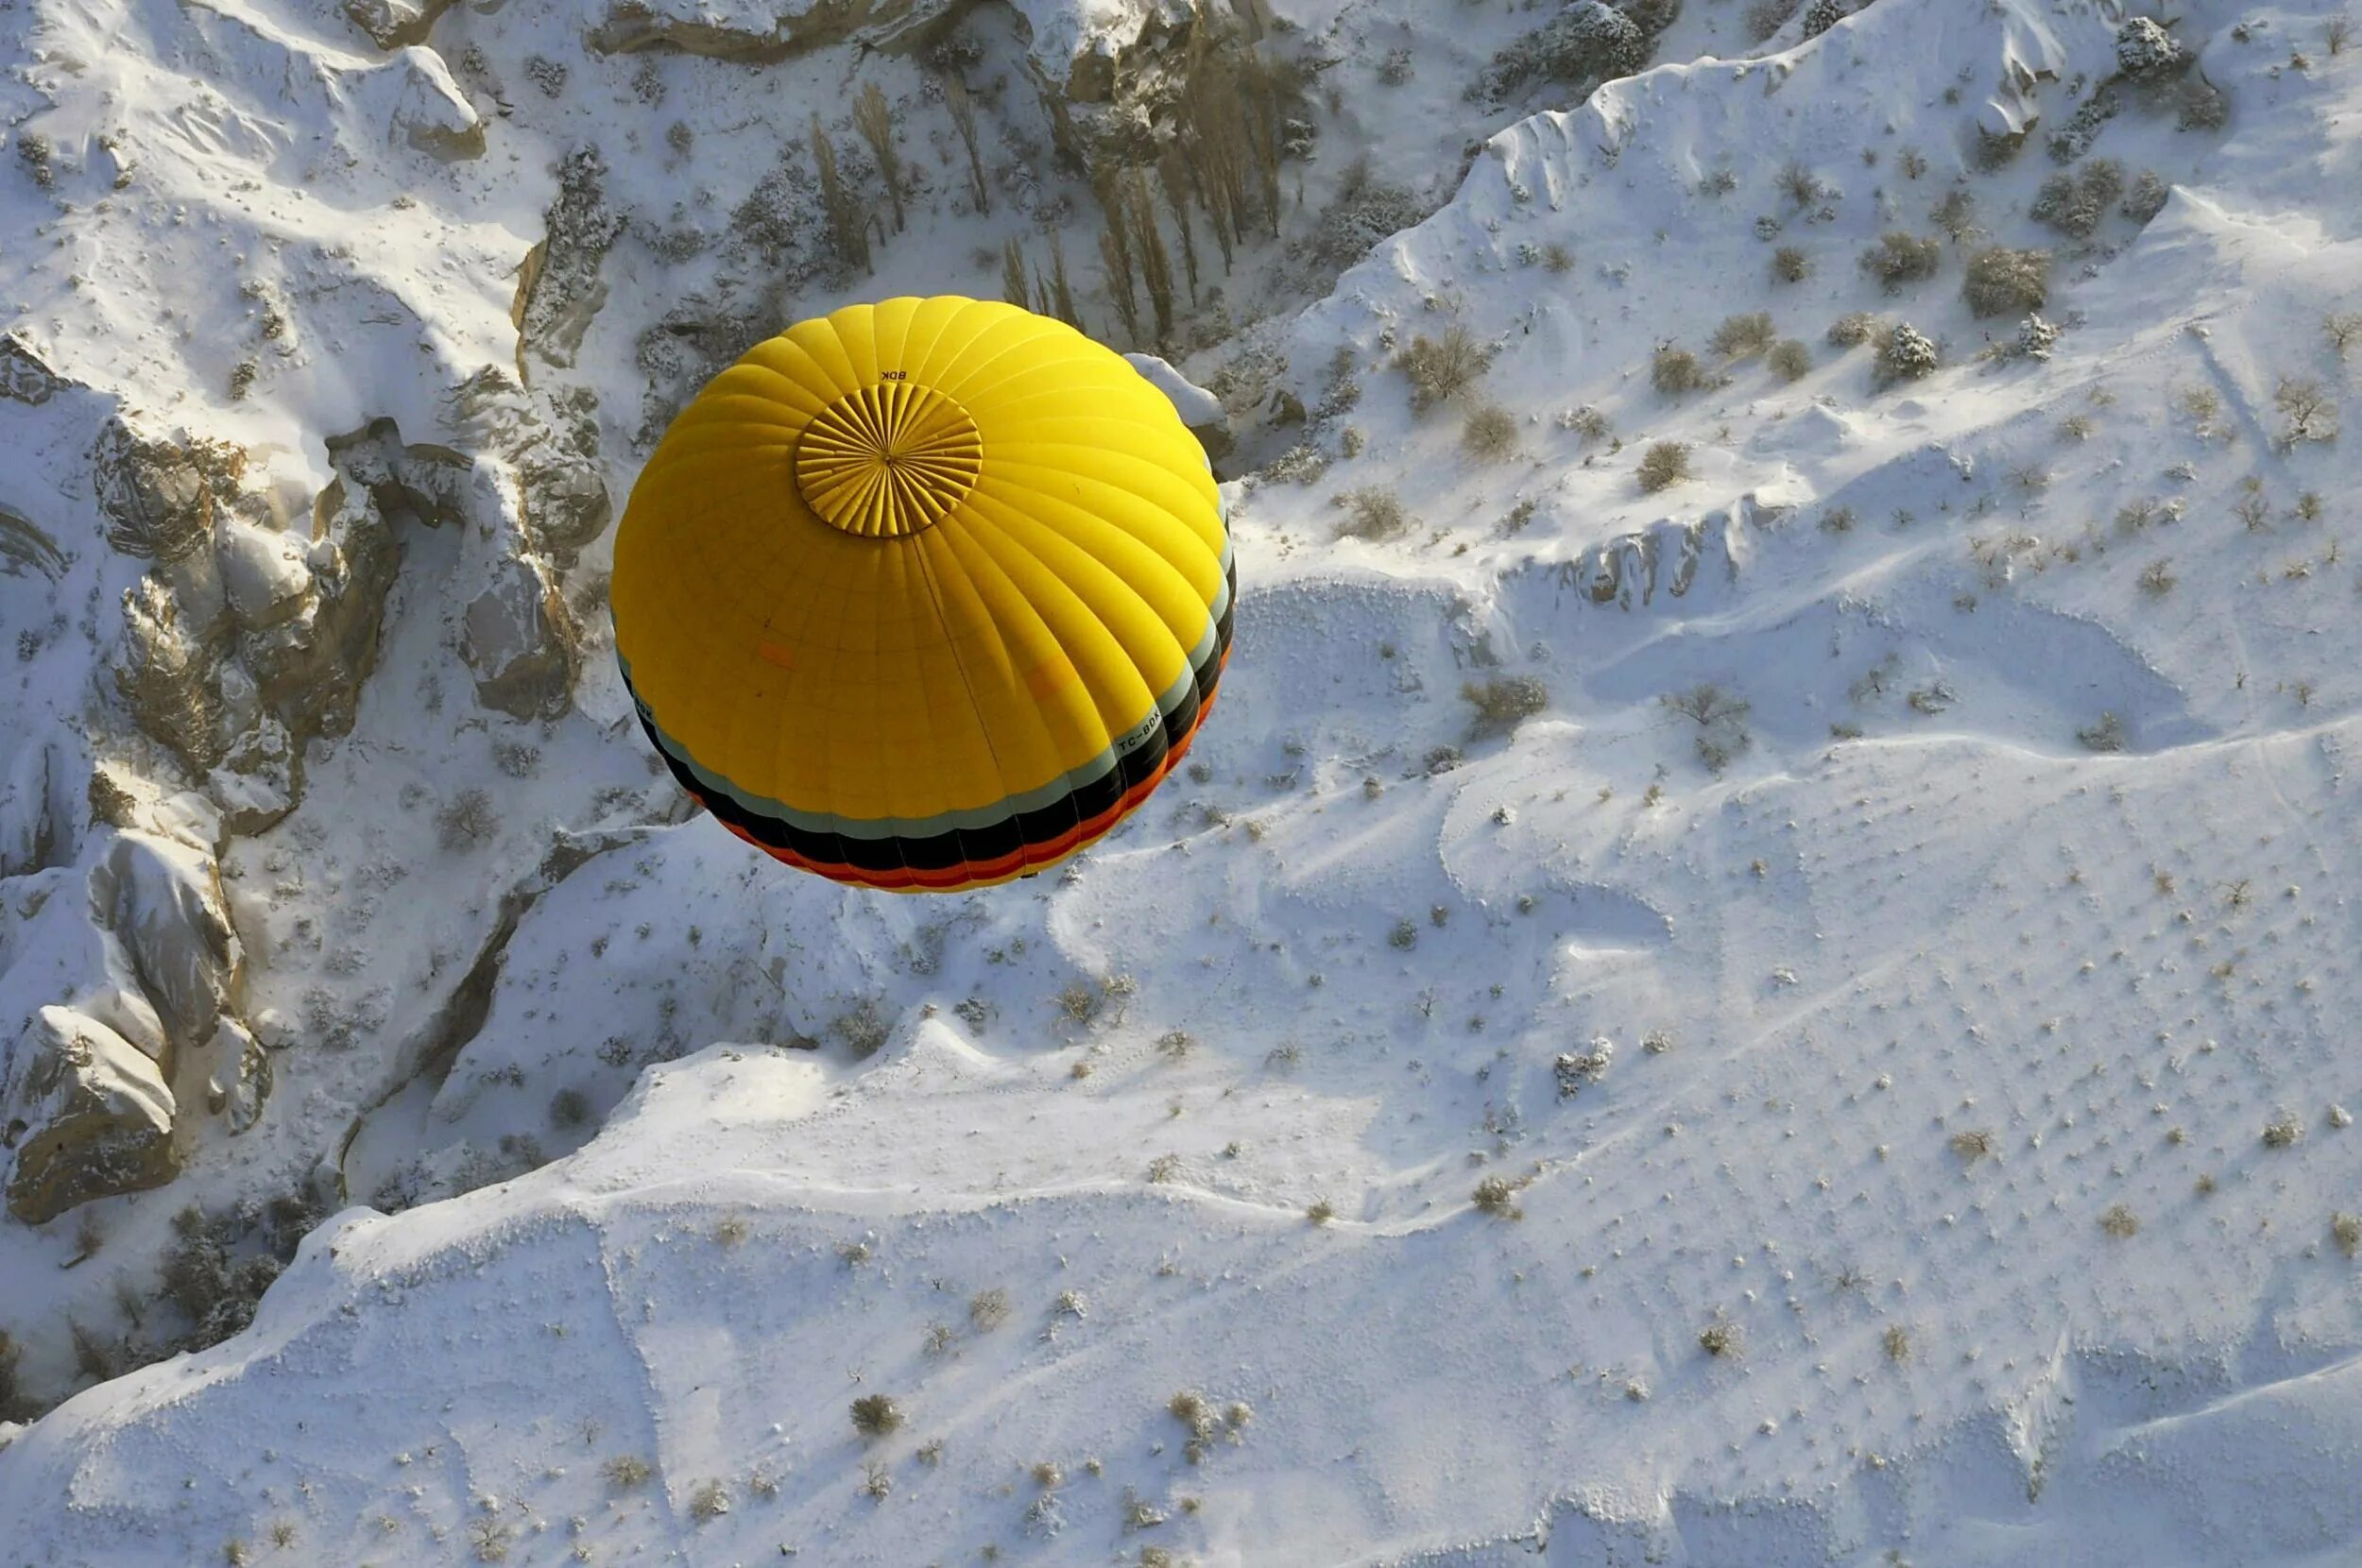 Шар со снегом. Воздушные шары на снегу. Воздушный снег. Воздушные шары на фоне горы со снегом.